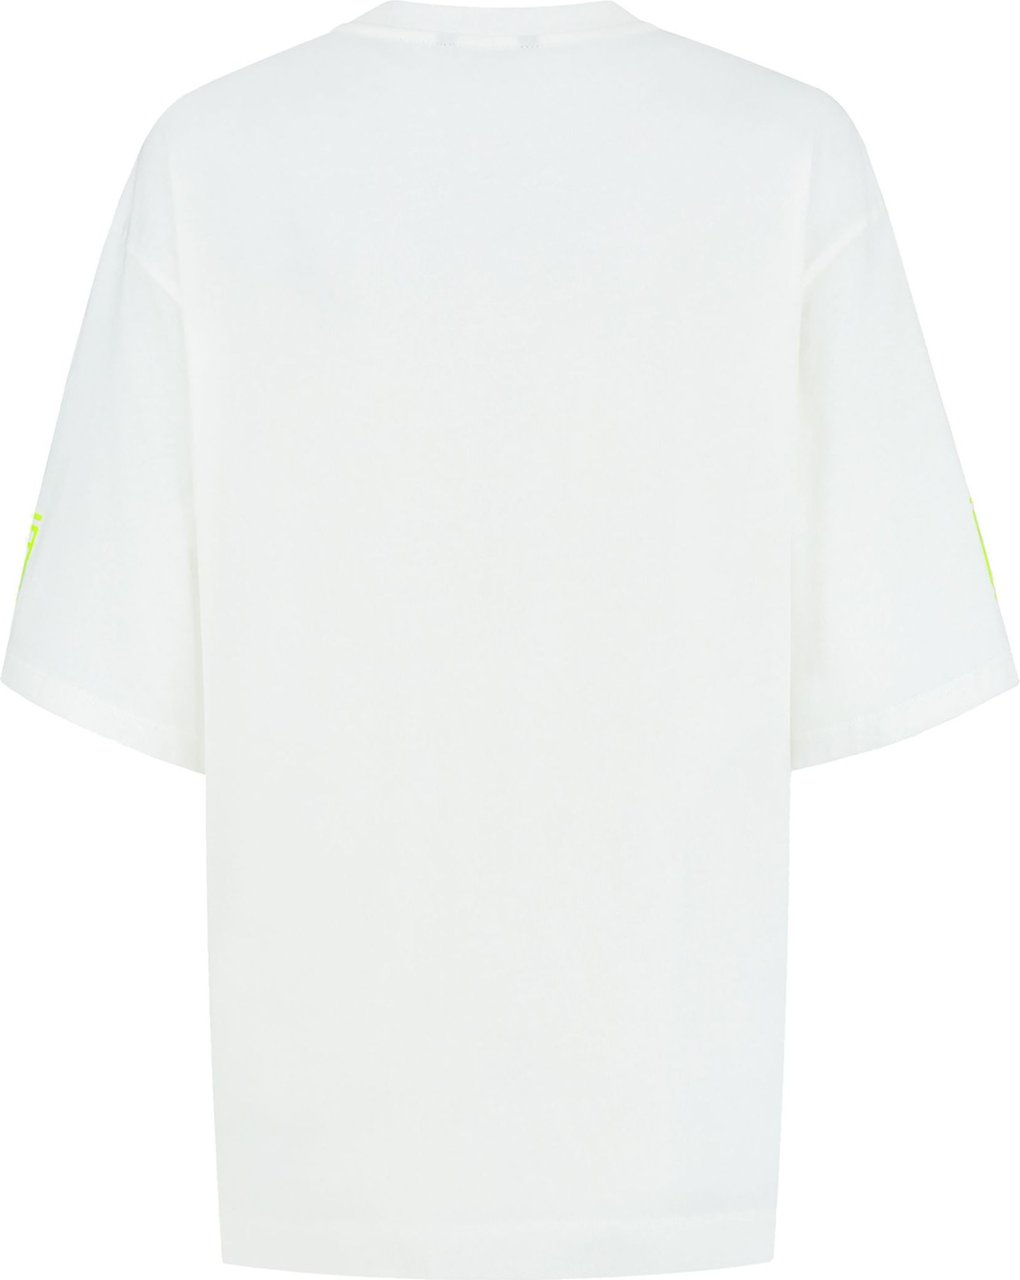 Nikkie One T-shirt Star White White